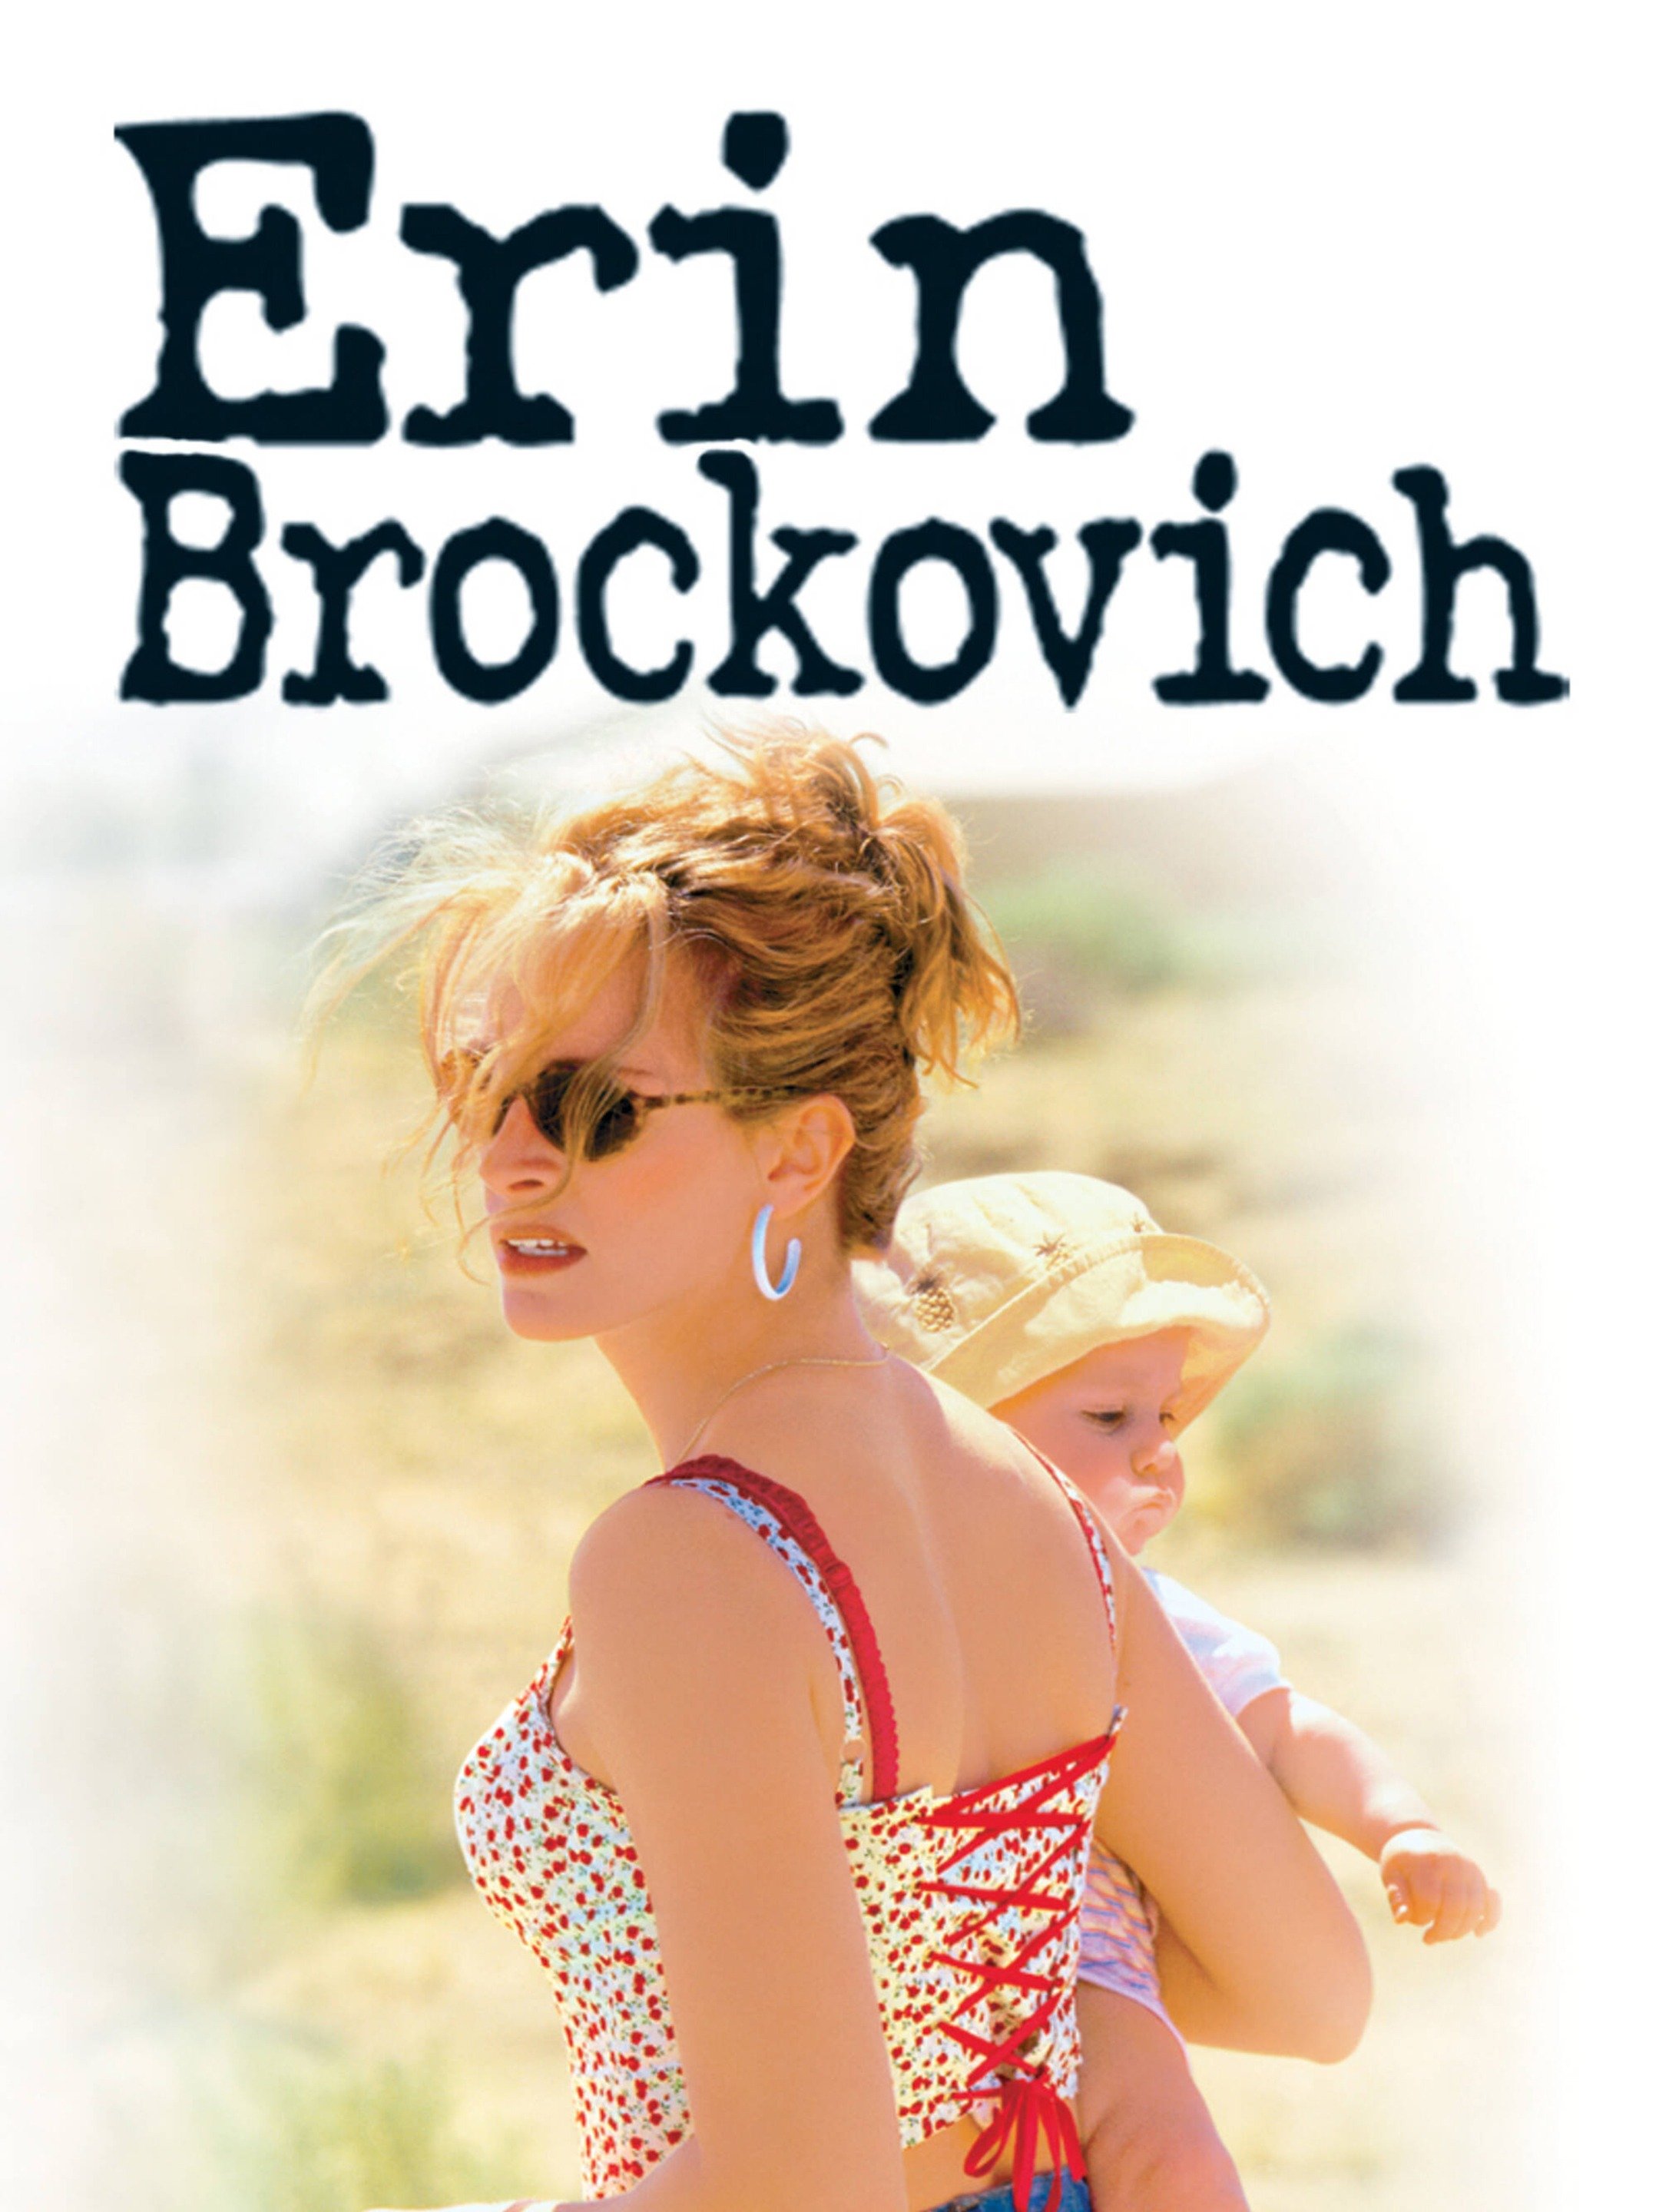 erin brockovich movie review essay